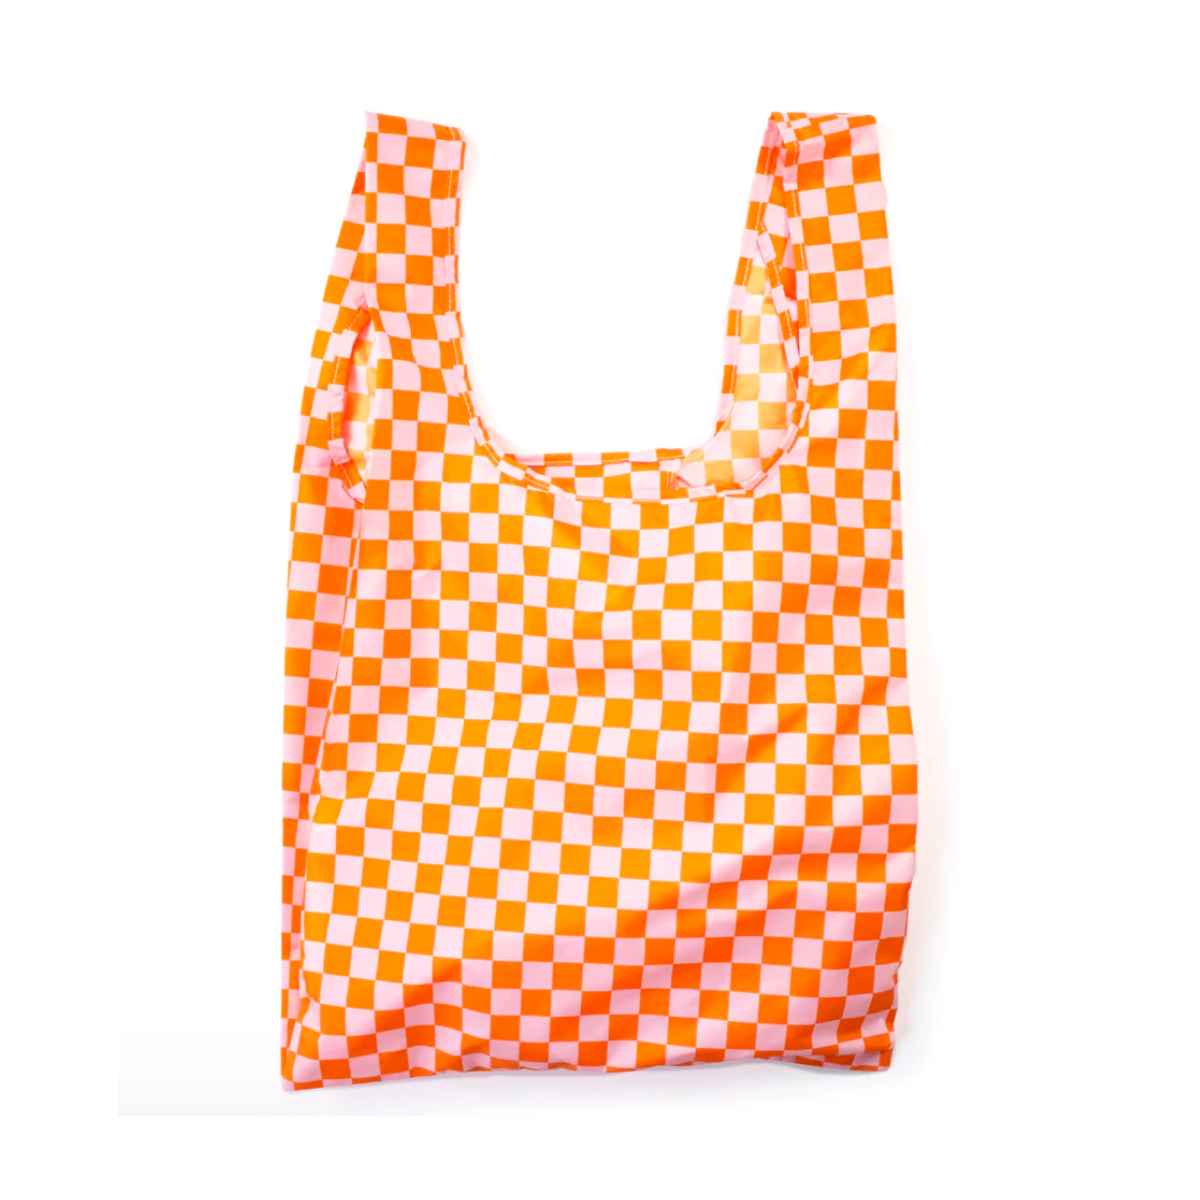 Kind Bag Checkerboard Tote Pink and Orange